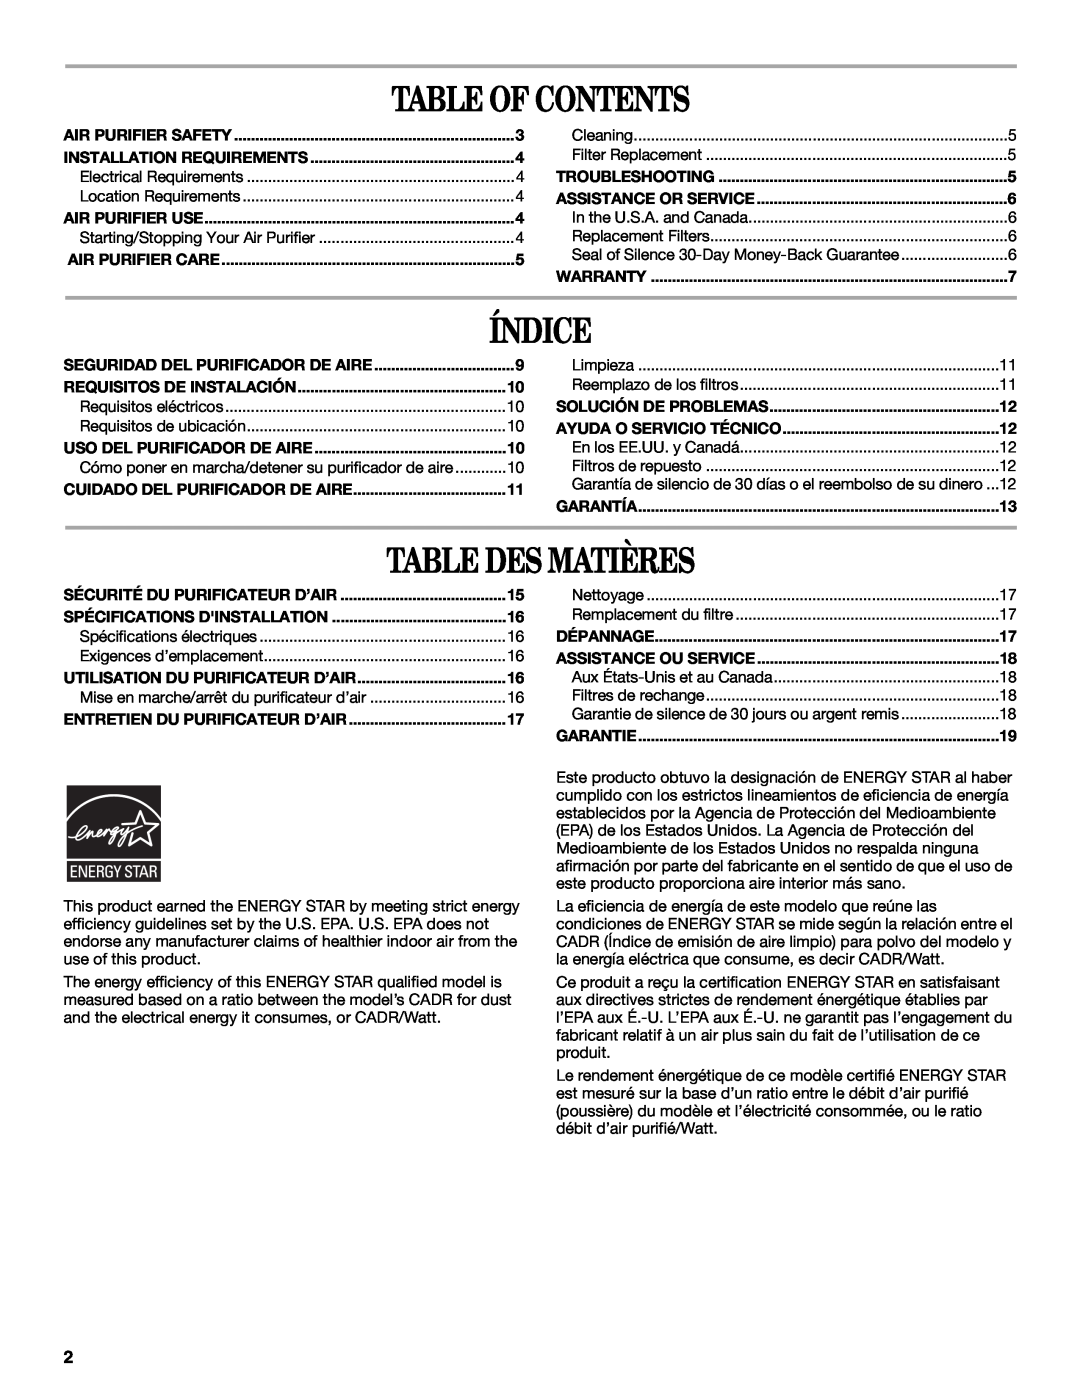 Maytag MT-AP250450 manual Table Of Contents, Índice, Table Des Matières 